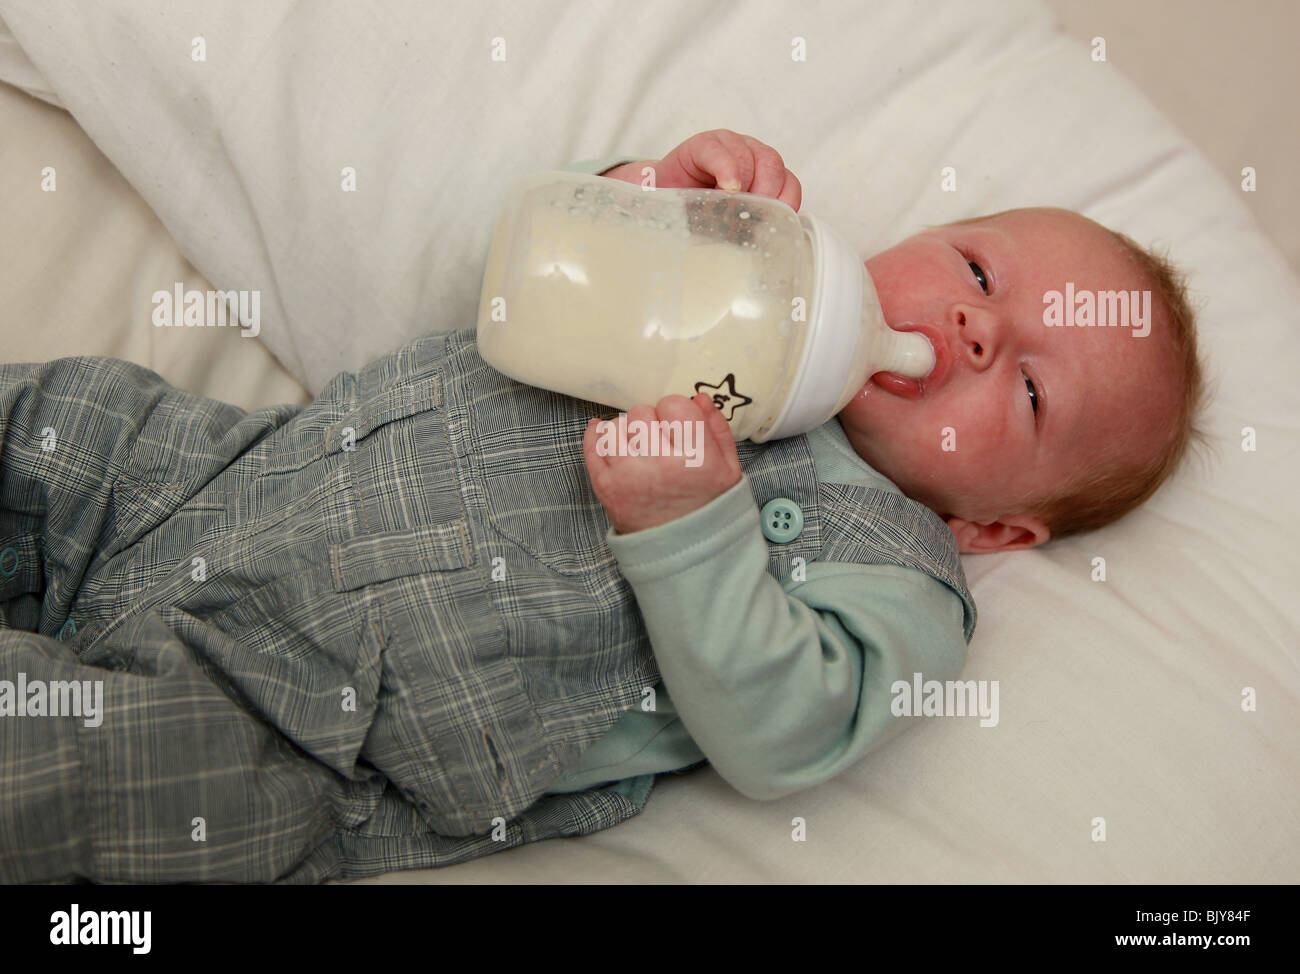 5 week old baby lying down holding bottle Stock Photo - Alamy